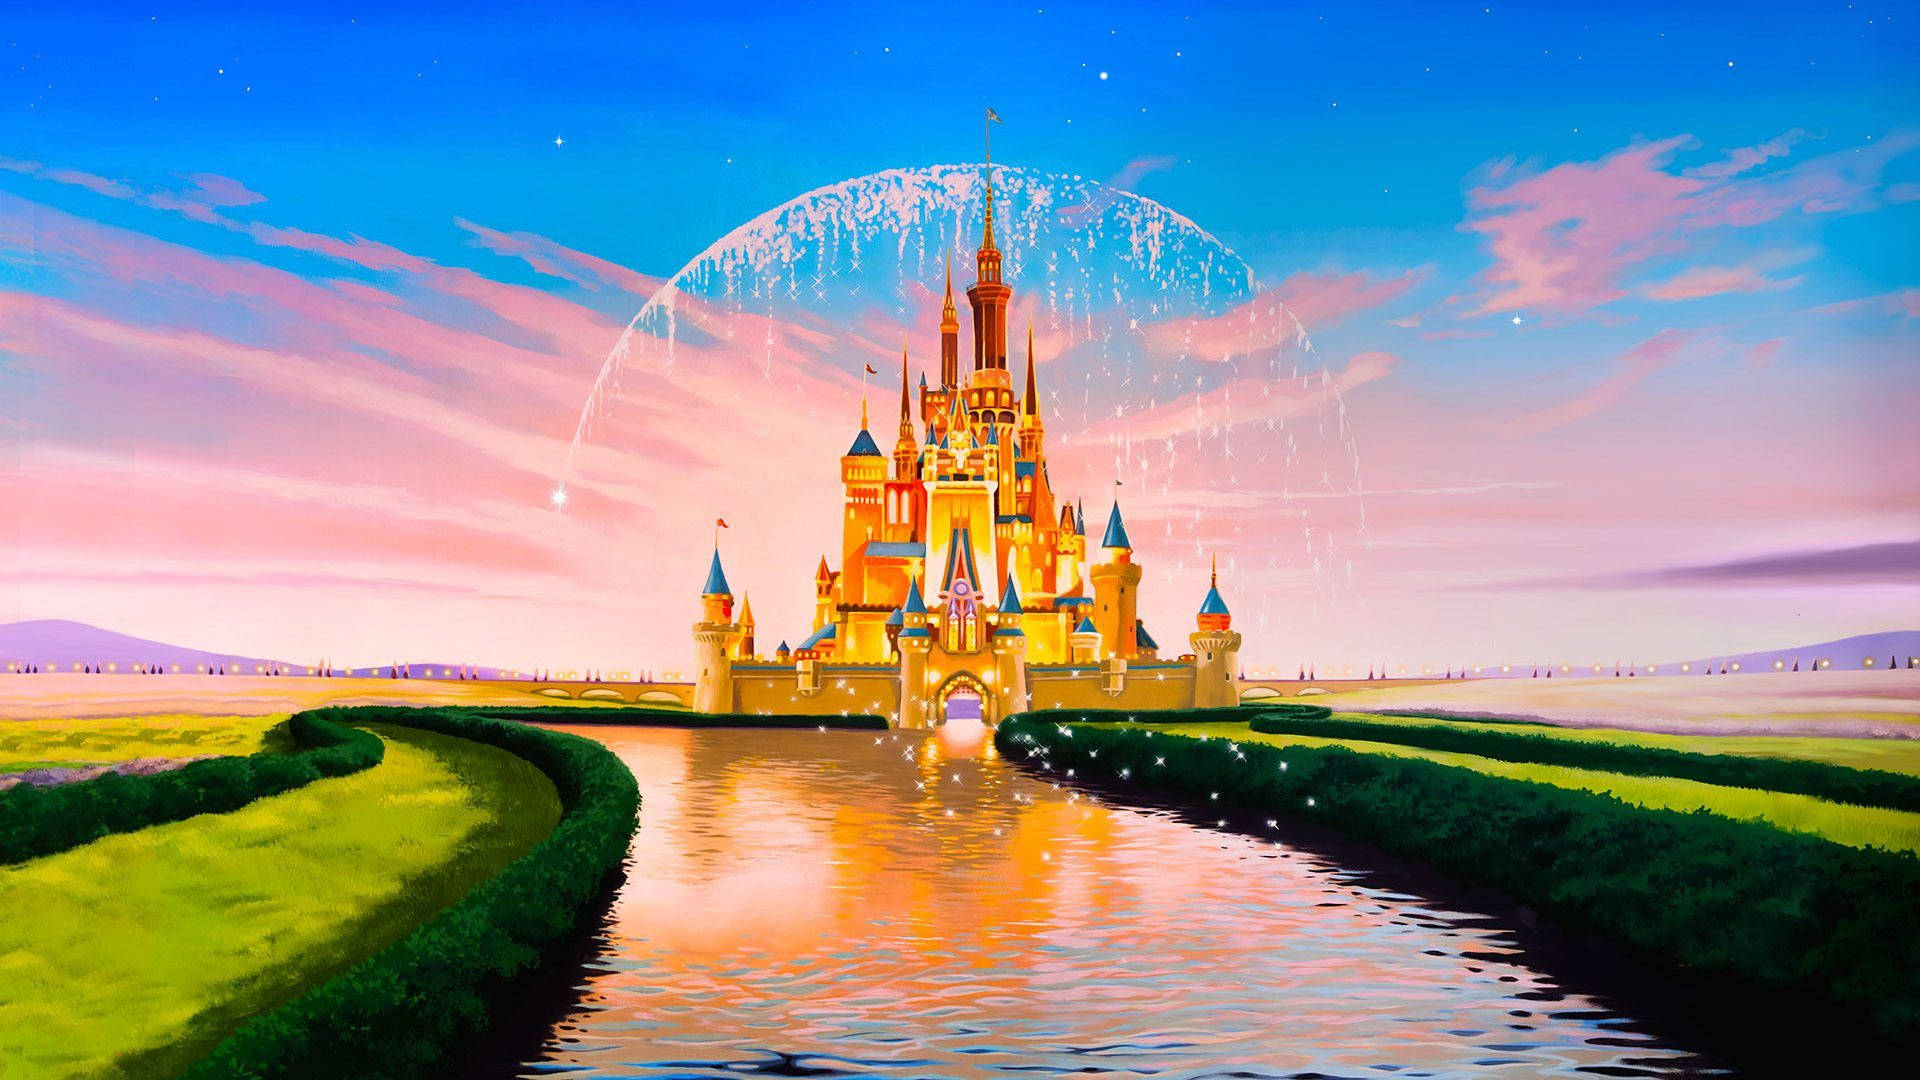 Disney Cartoon Castle Cinderella Princess Crystal Shoes Magical